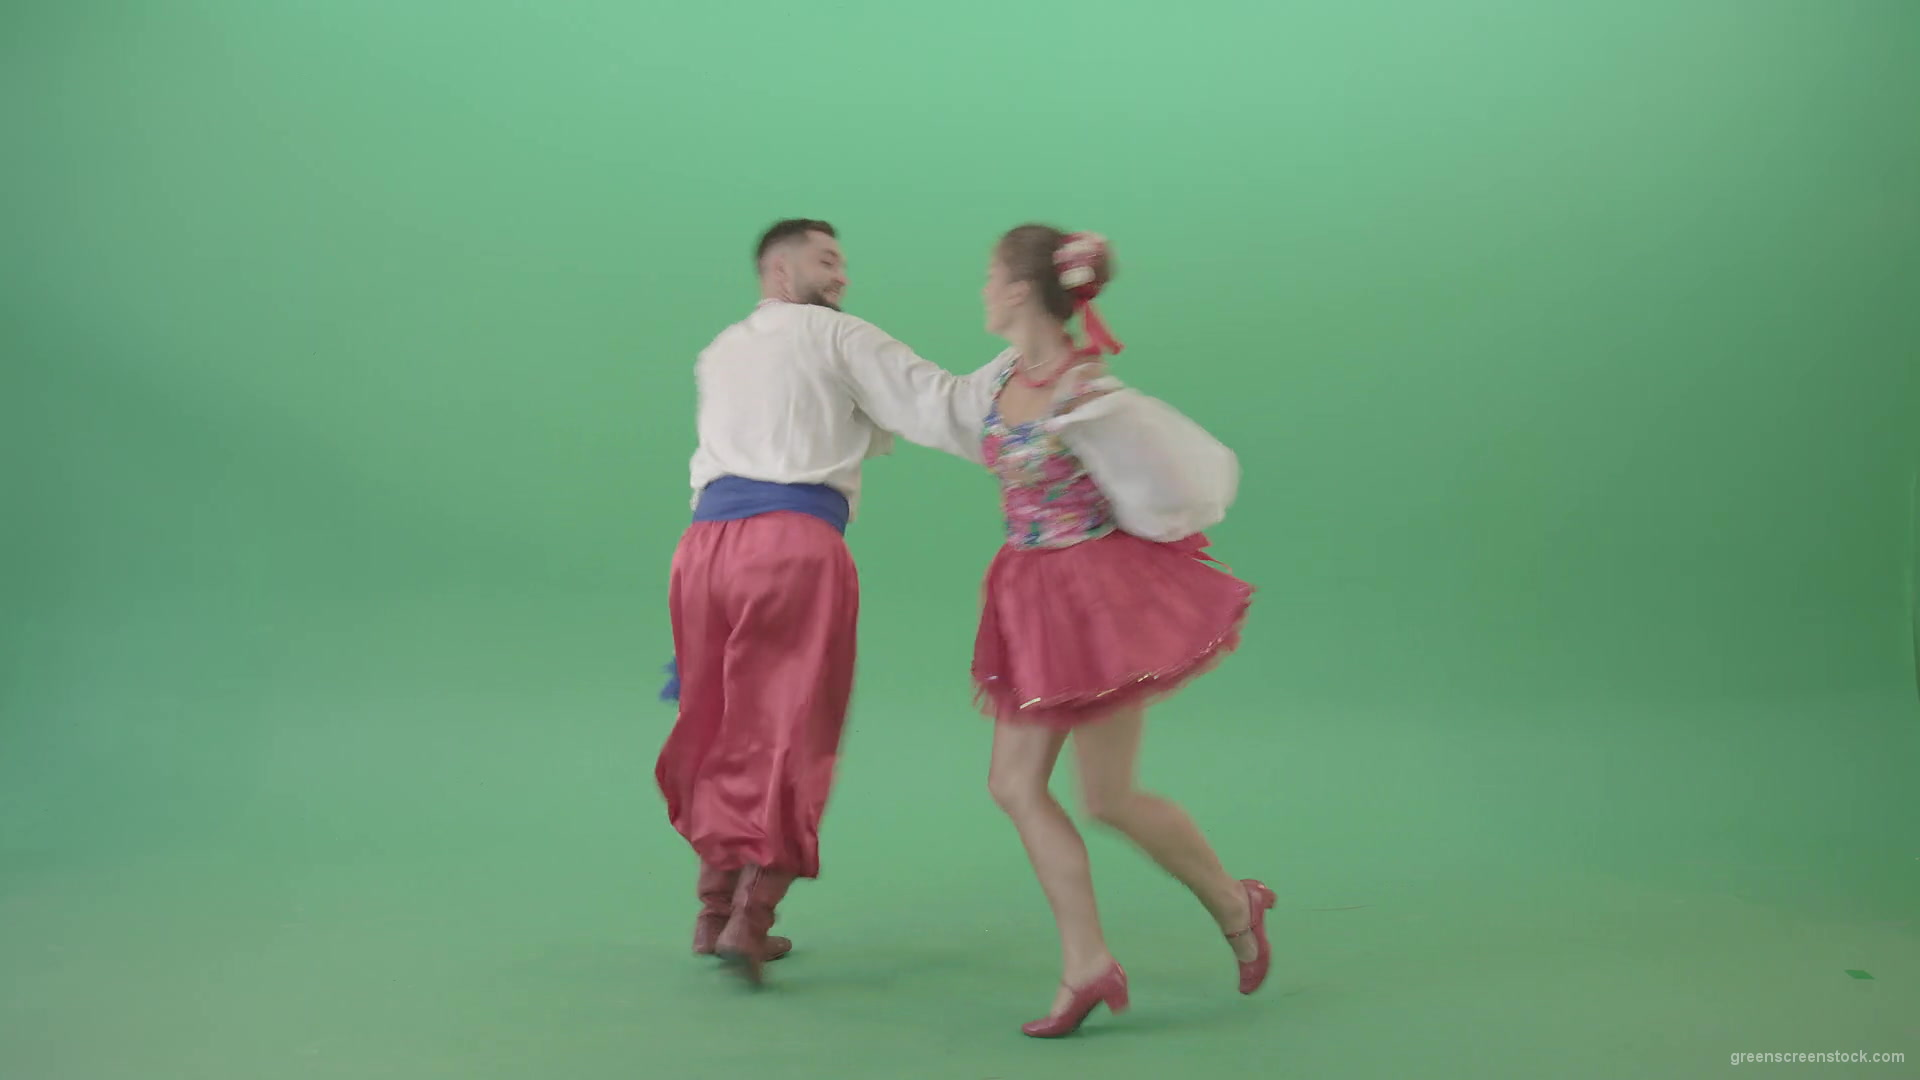 Folk-dance-Polka-in-Ukraine-national-dacing-couple-isolated-on-Green-Screen-4K-Video-Footage-1920_004 Green Screen Stock